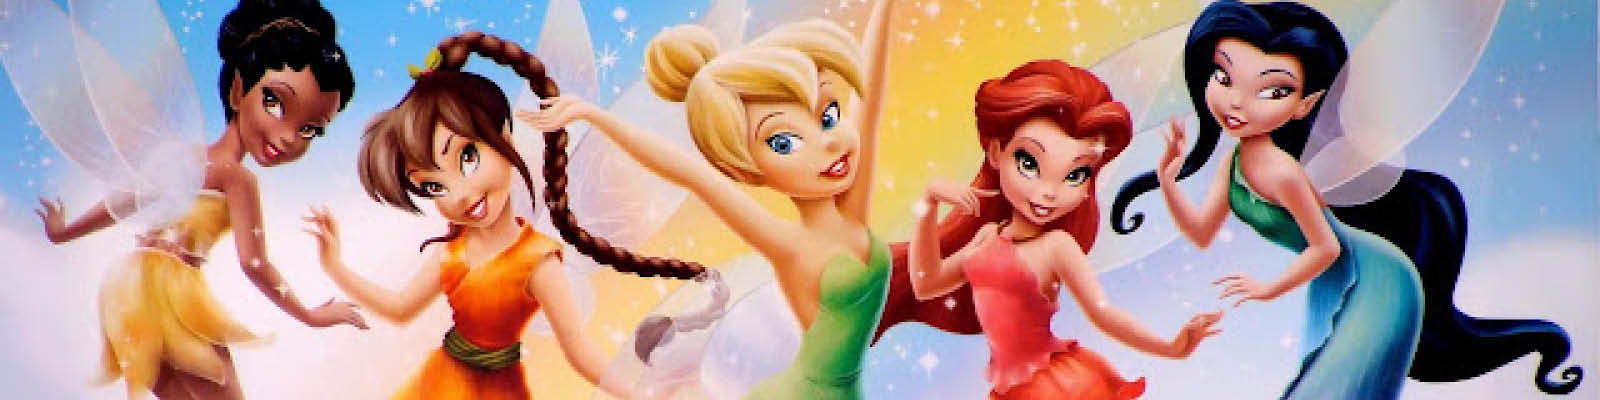 Disney Fairies, Tinkerbell